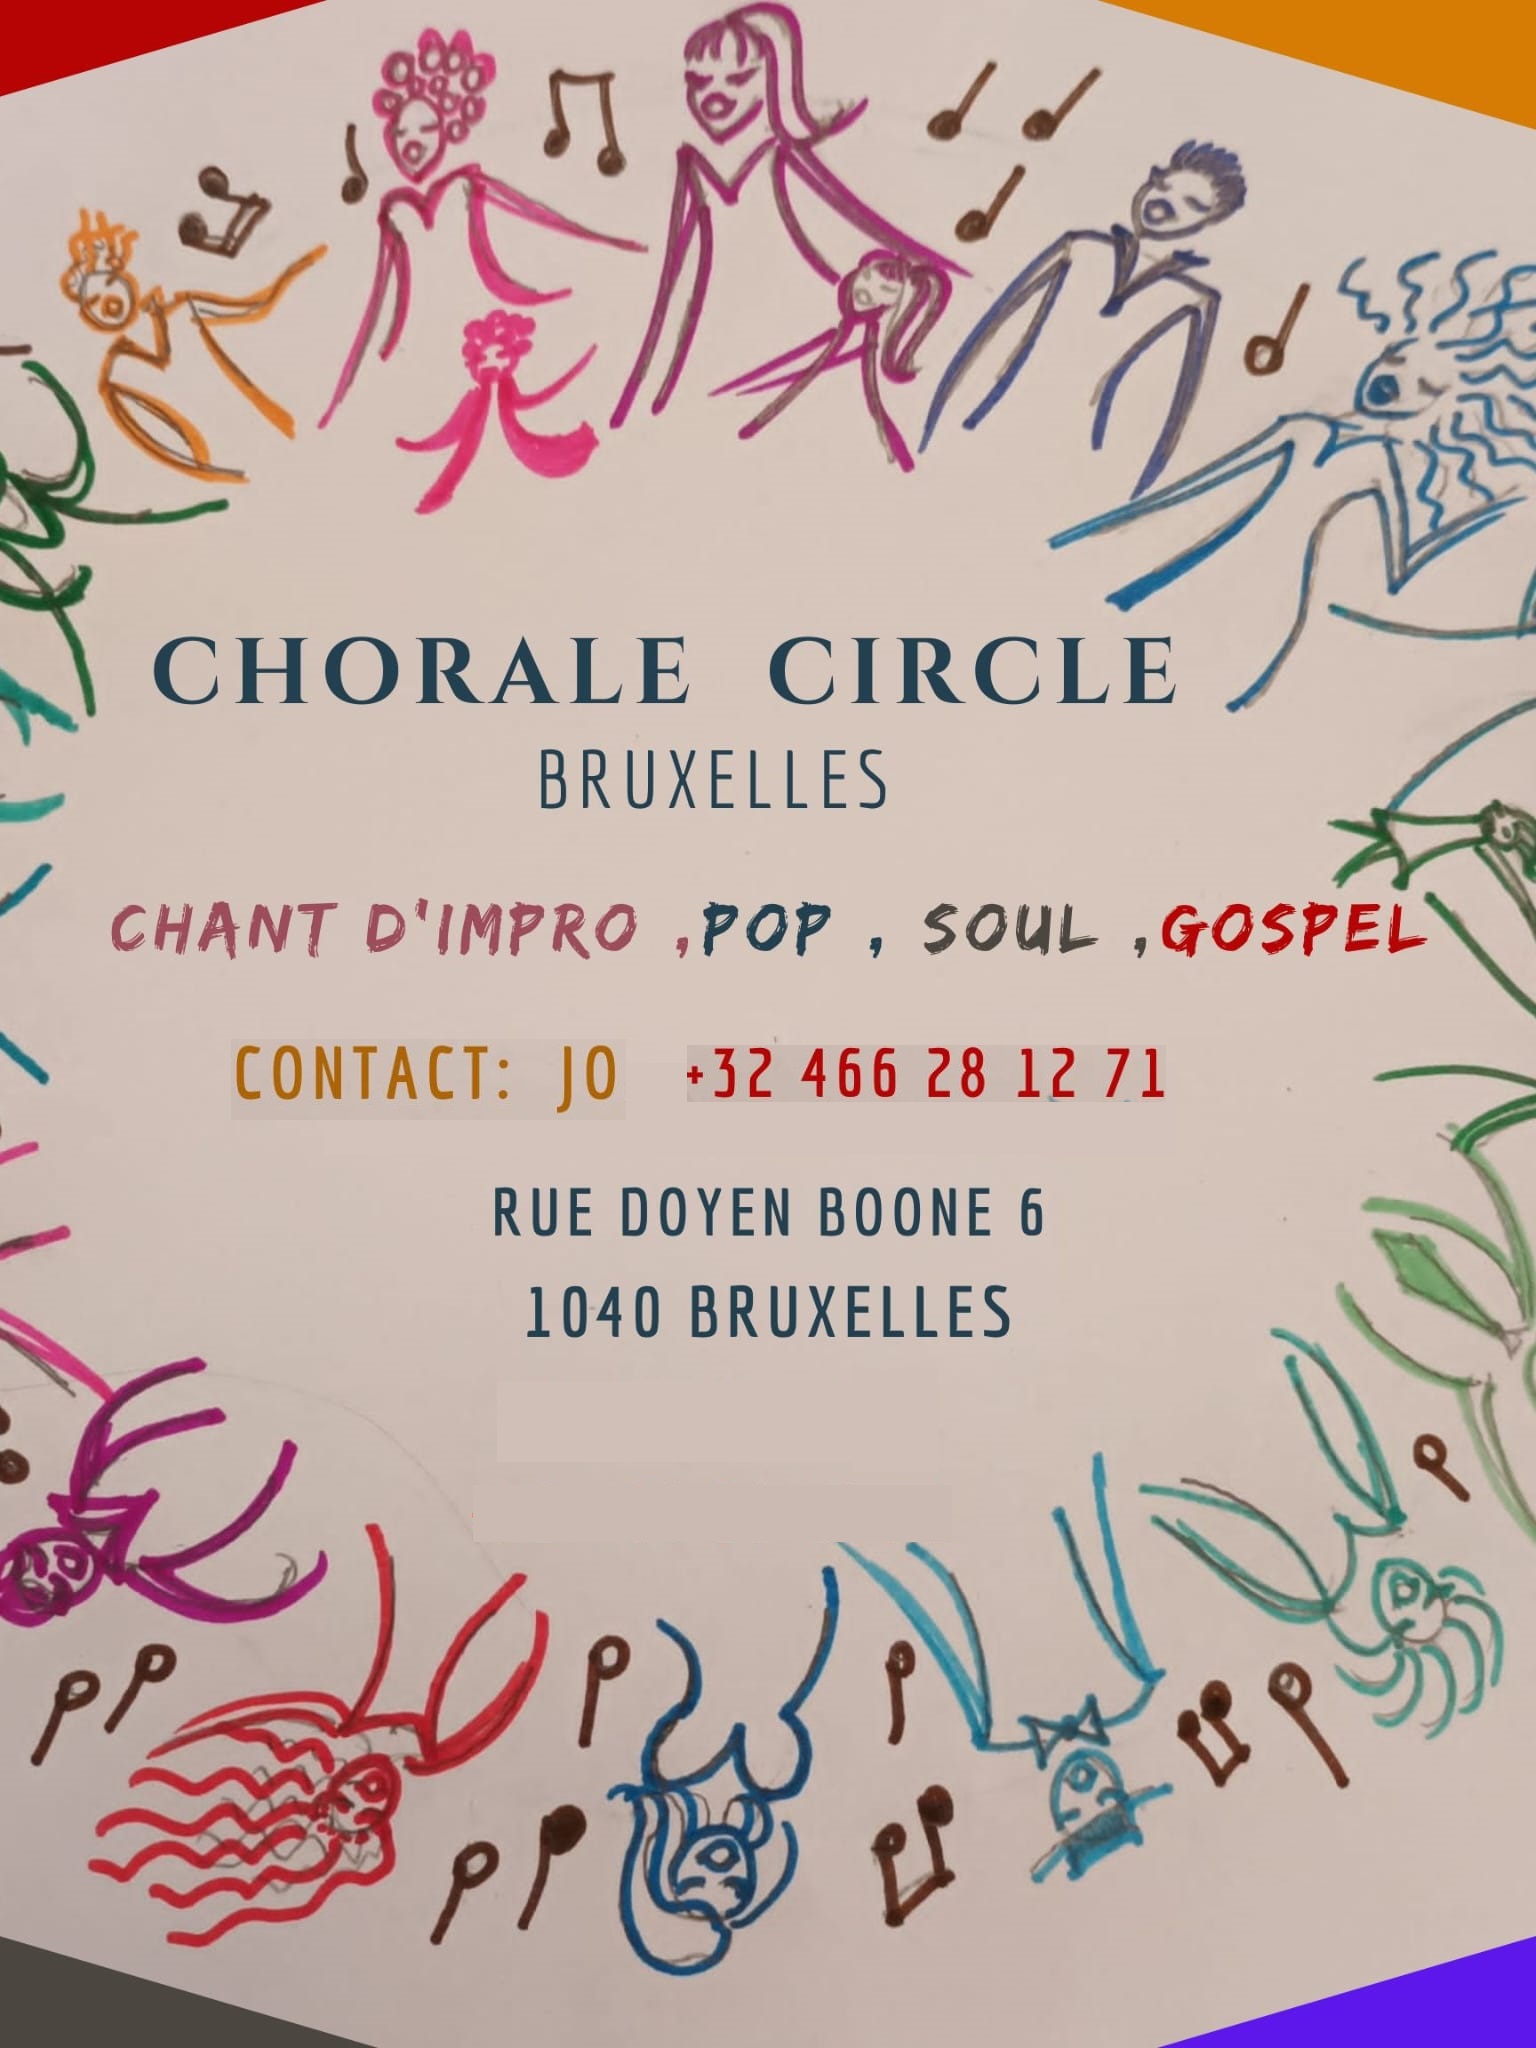 Chorale Circle